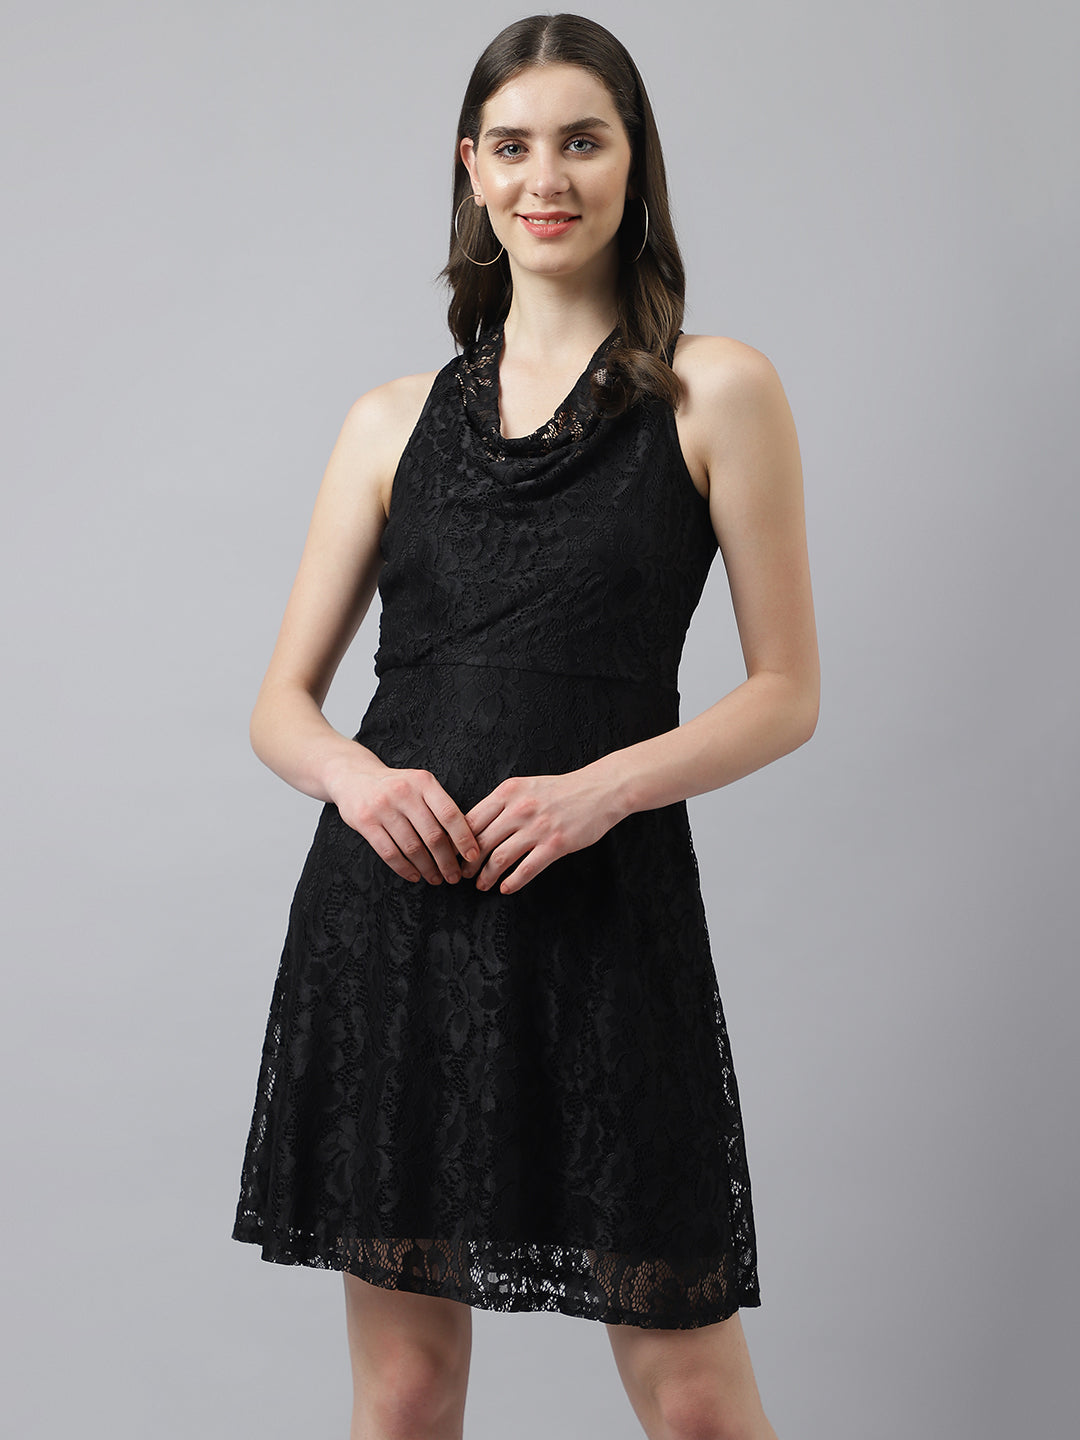 Black Lace Dress Halter Neckline